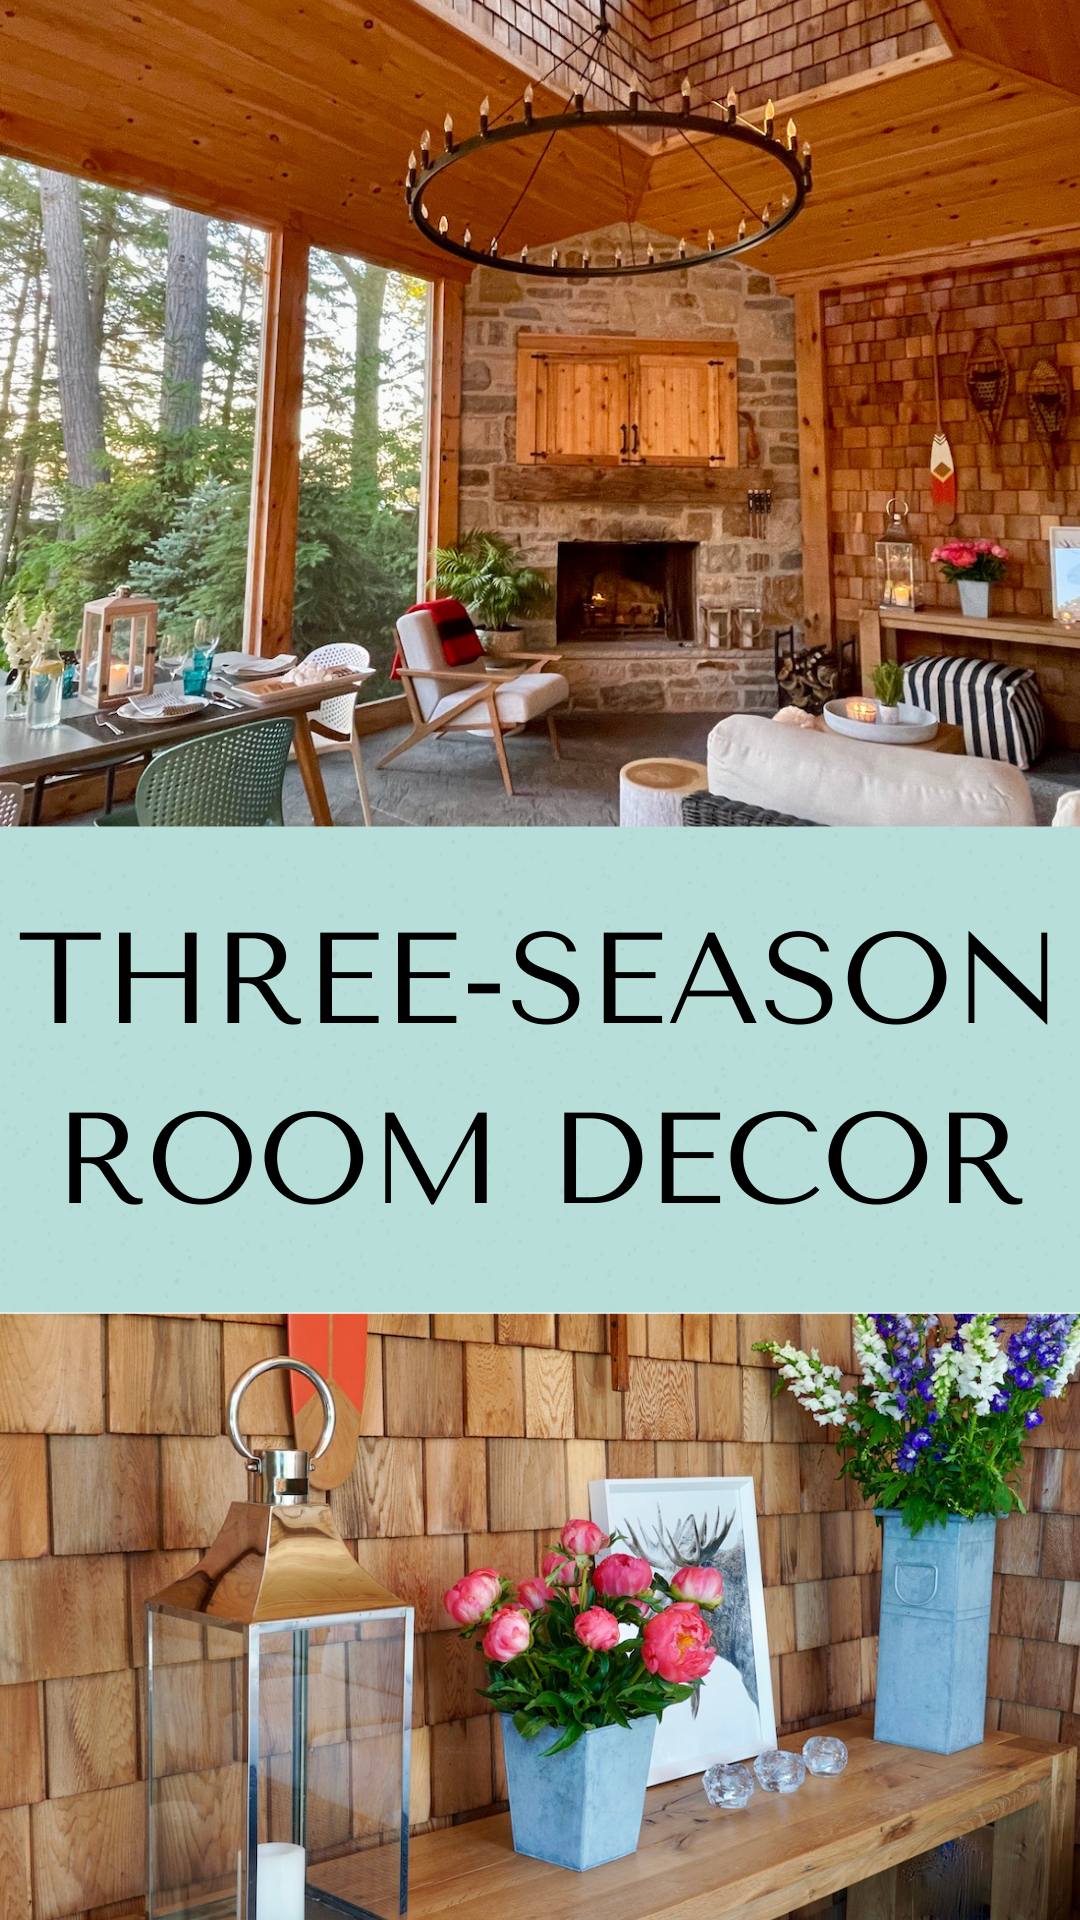 Three-Season Room Decor